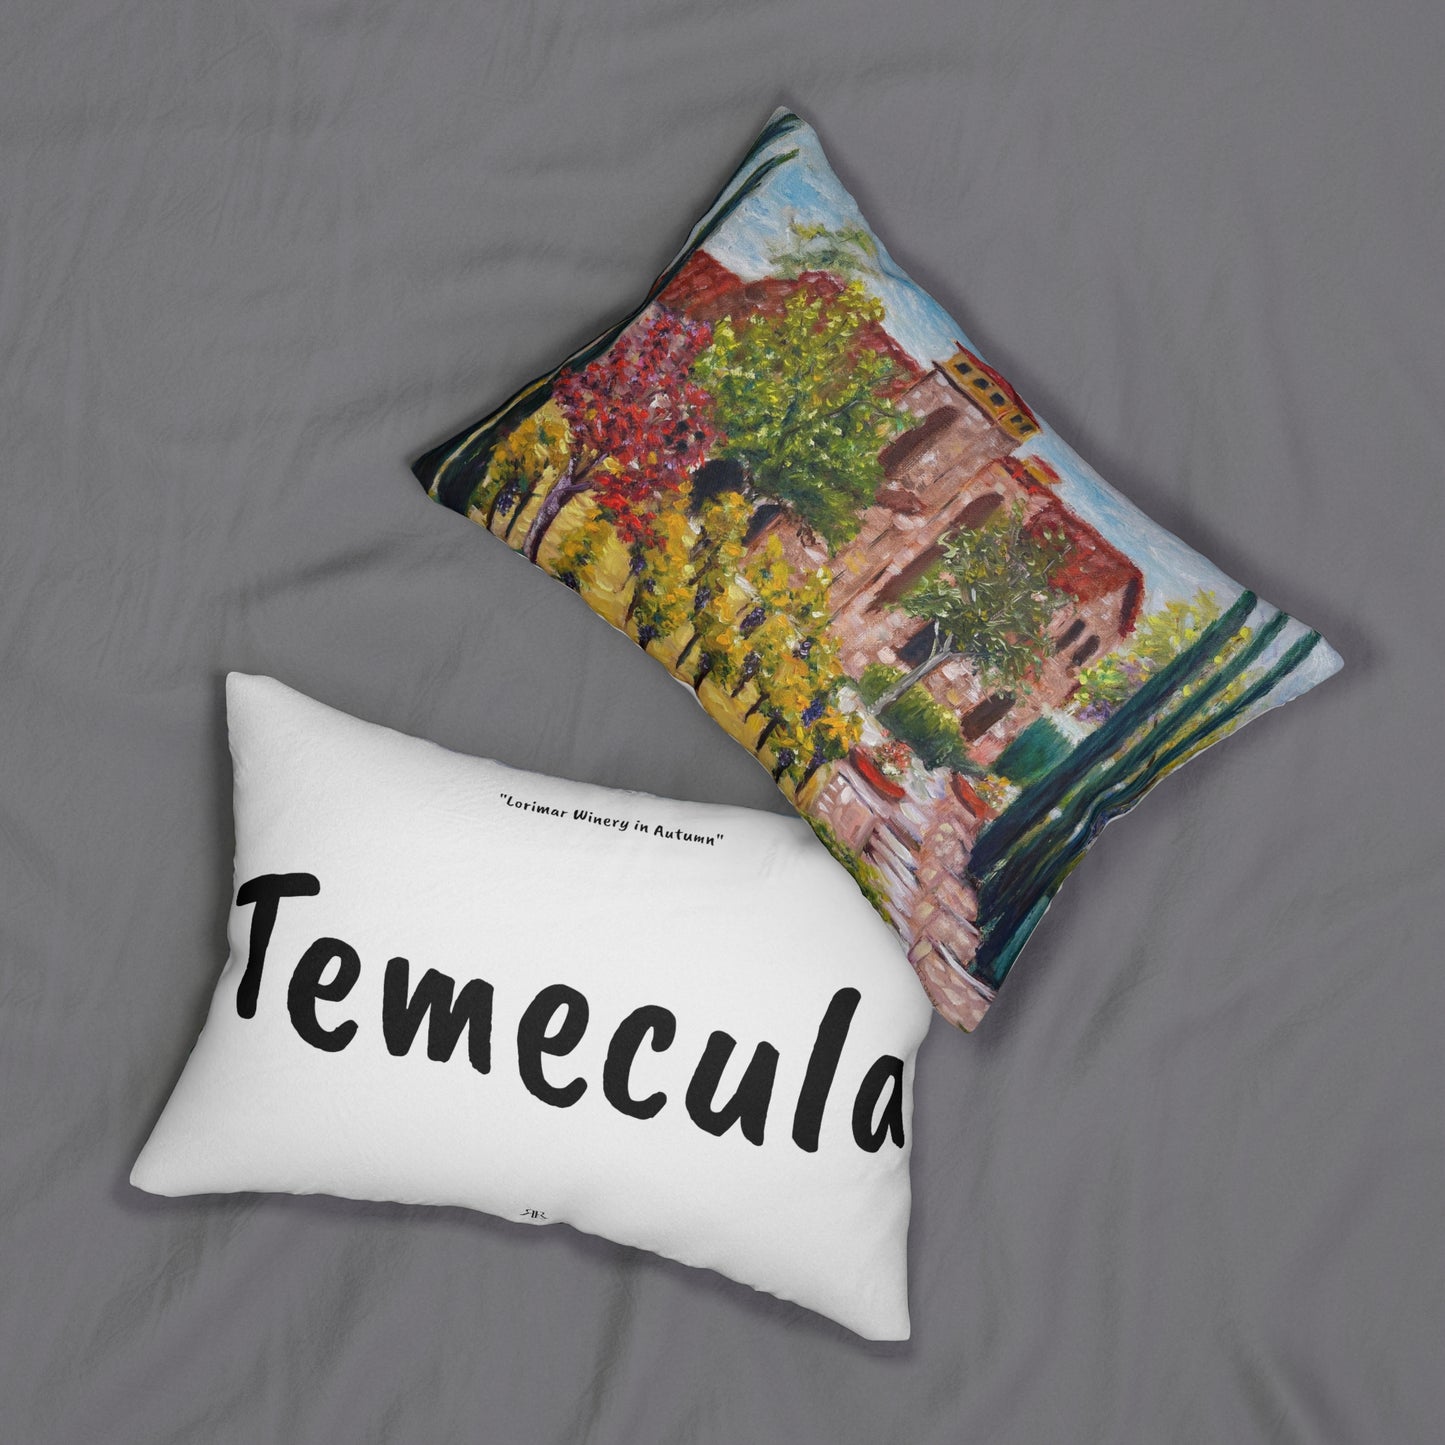 Almohada lumbar Temecula con pintura "Lorimar Winery in Autumn" y "Temecula"